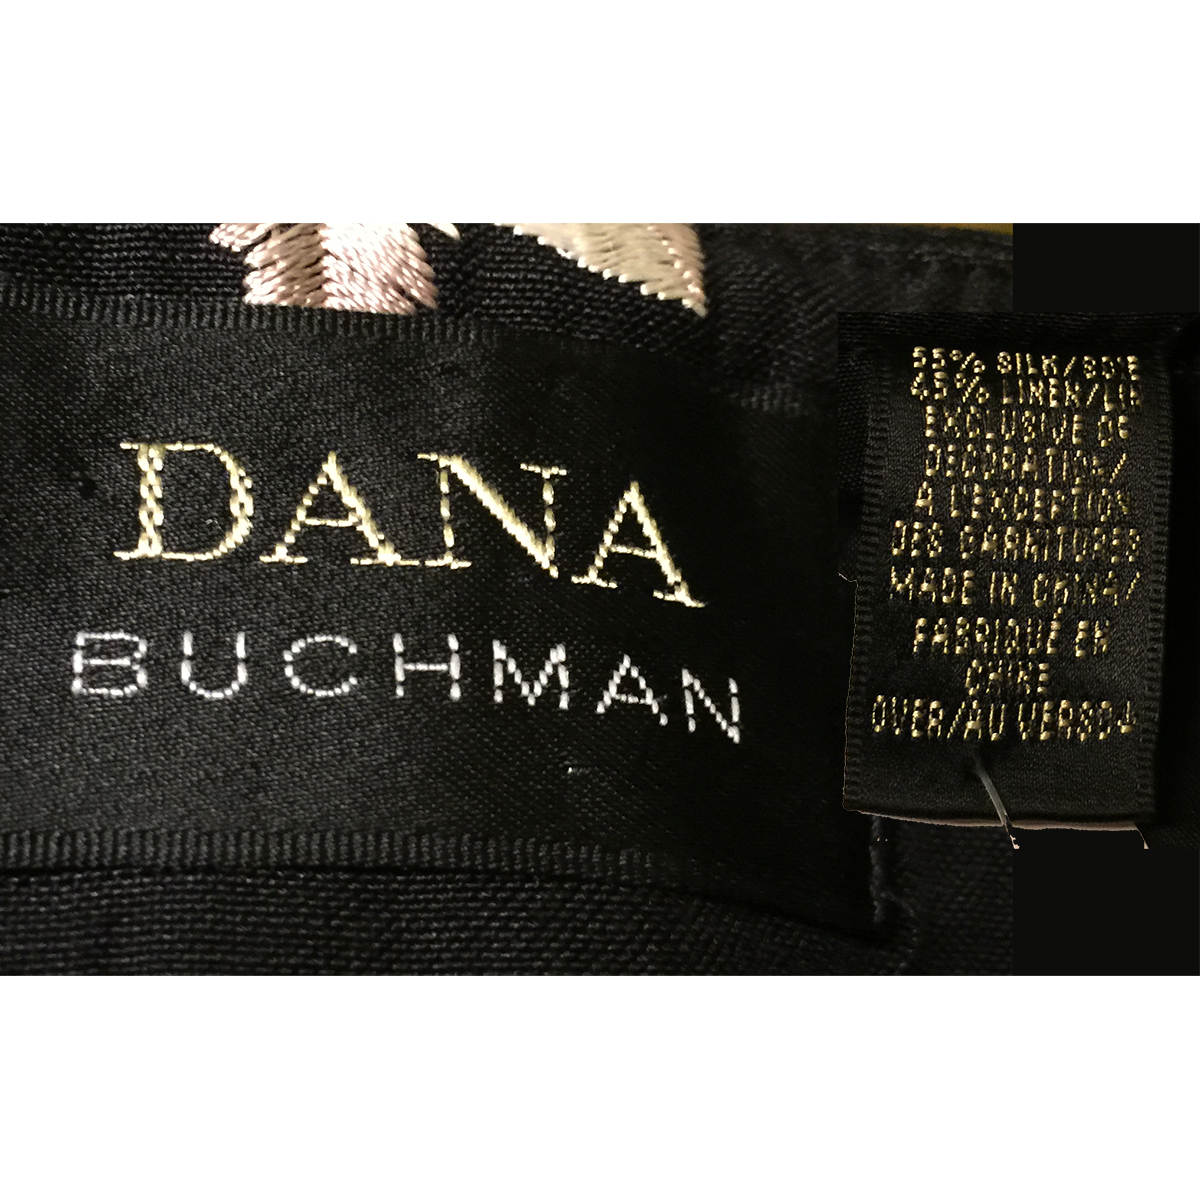 https://madgeshatbox.com/wp-content/uploads/2020/08/Dana-Buchman-label.jpg